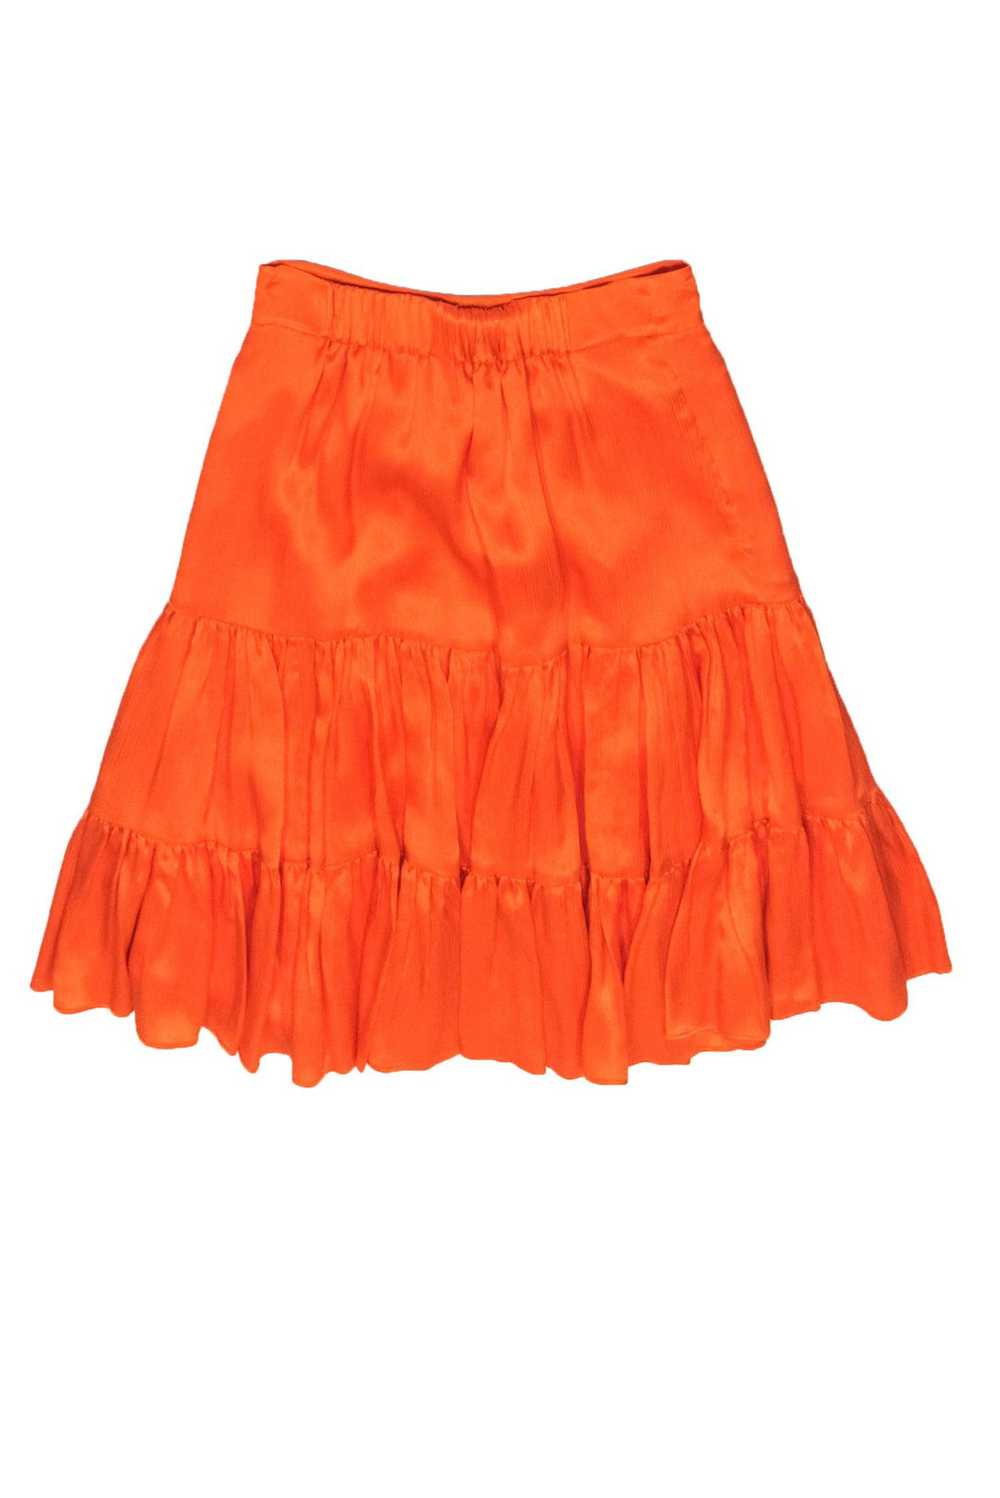 Lilly Pulitzer - Neon Orange Silk Satin A-Line Ti… - image 2